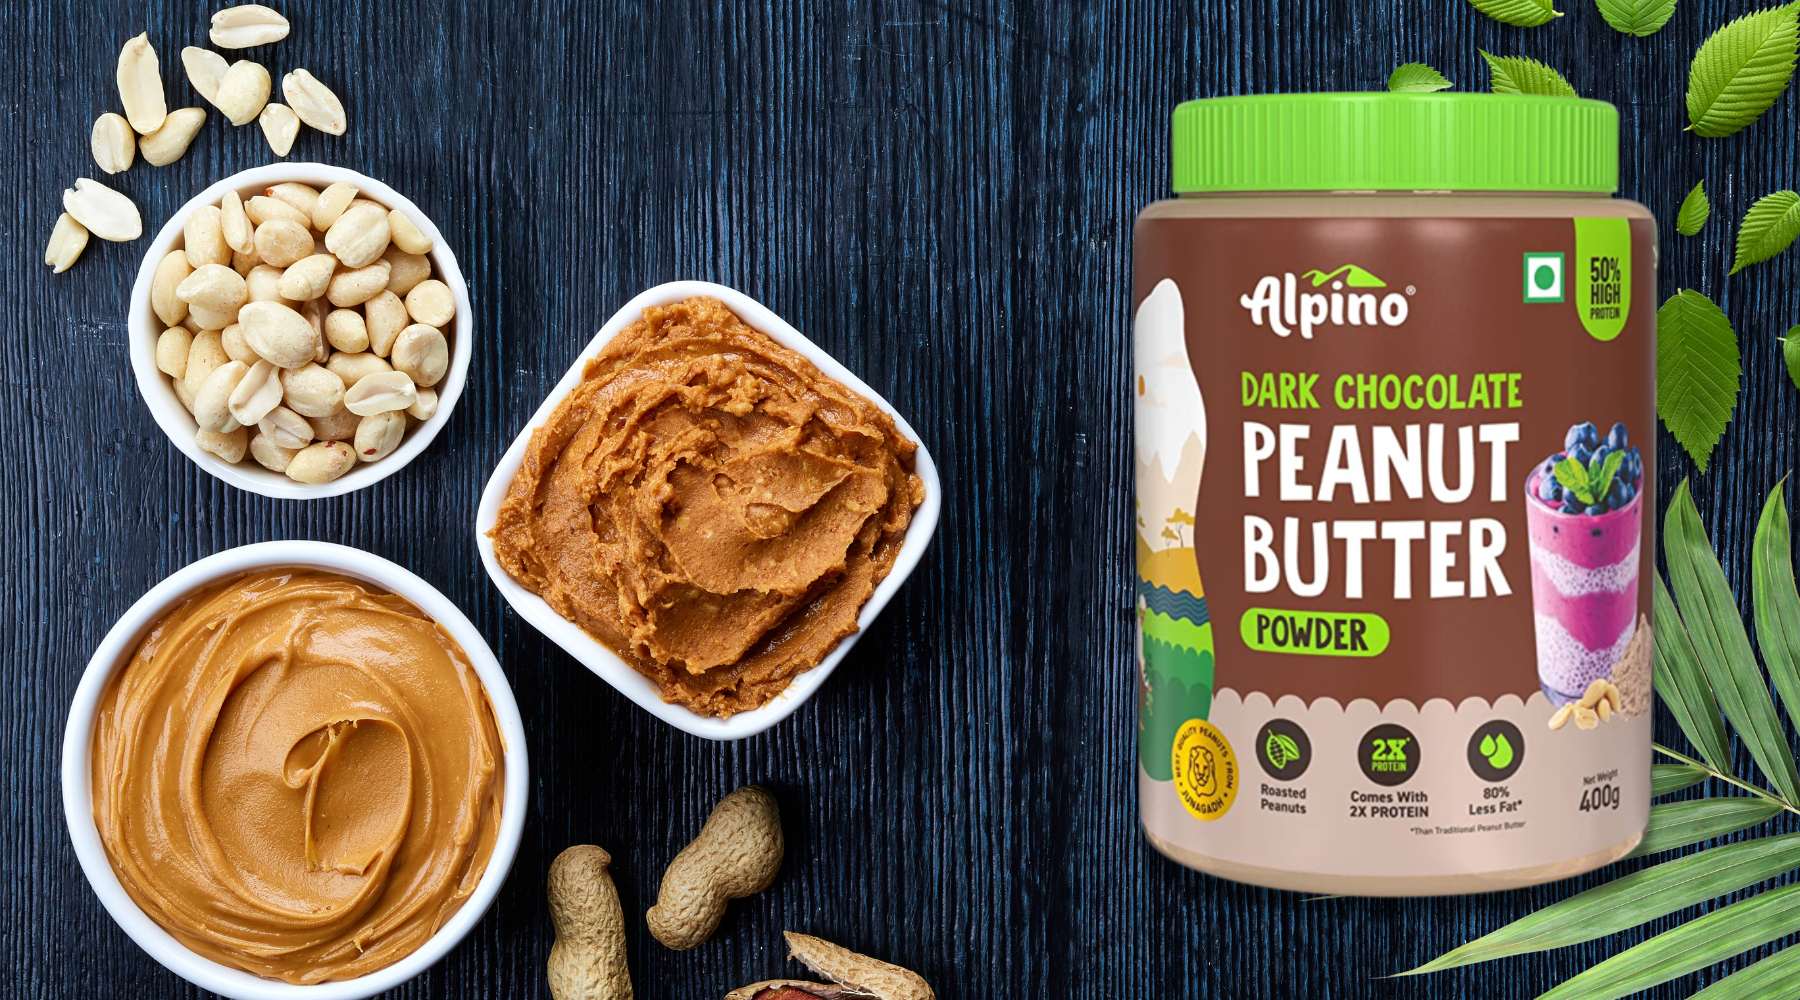 Alpino Peanut Butter Powder in Dark Chocolate: A Convenient Protein-packed Option